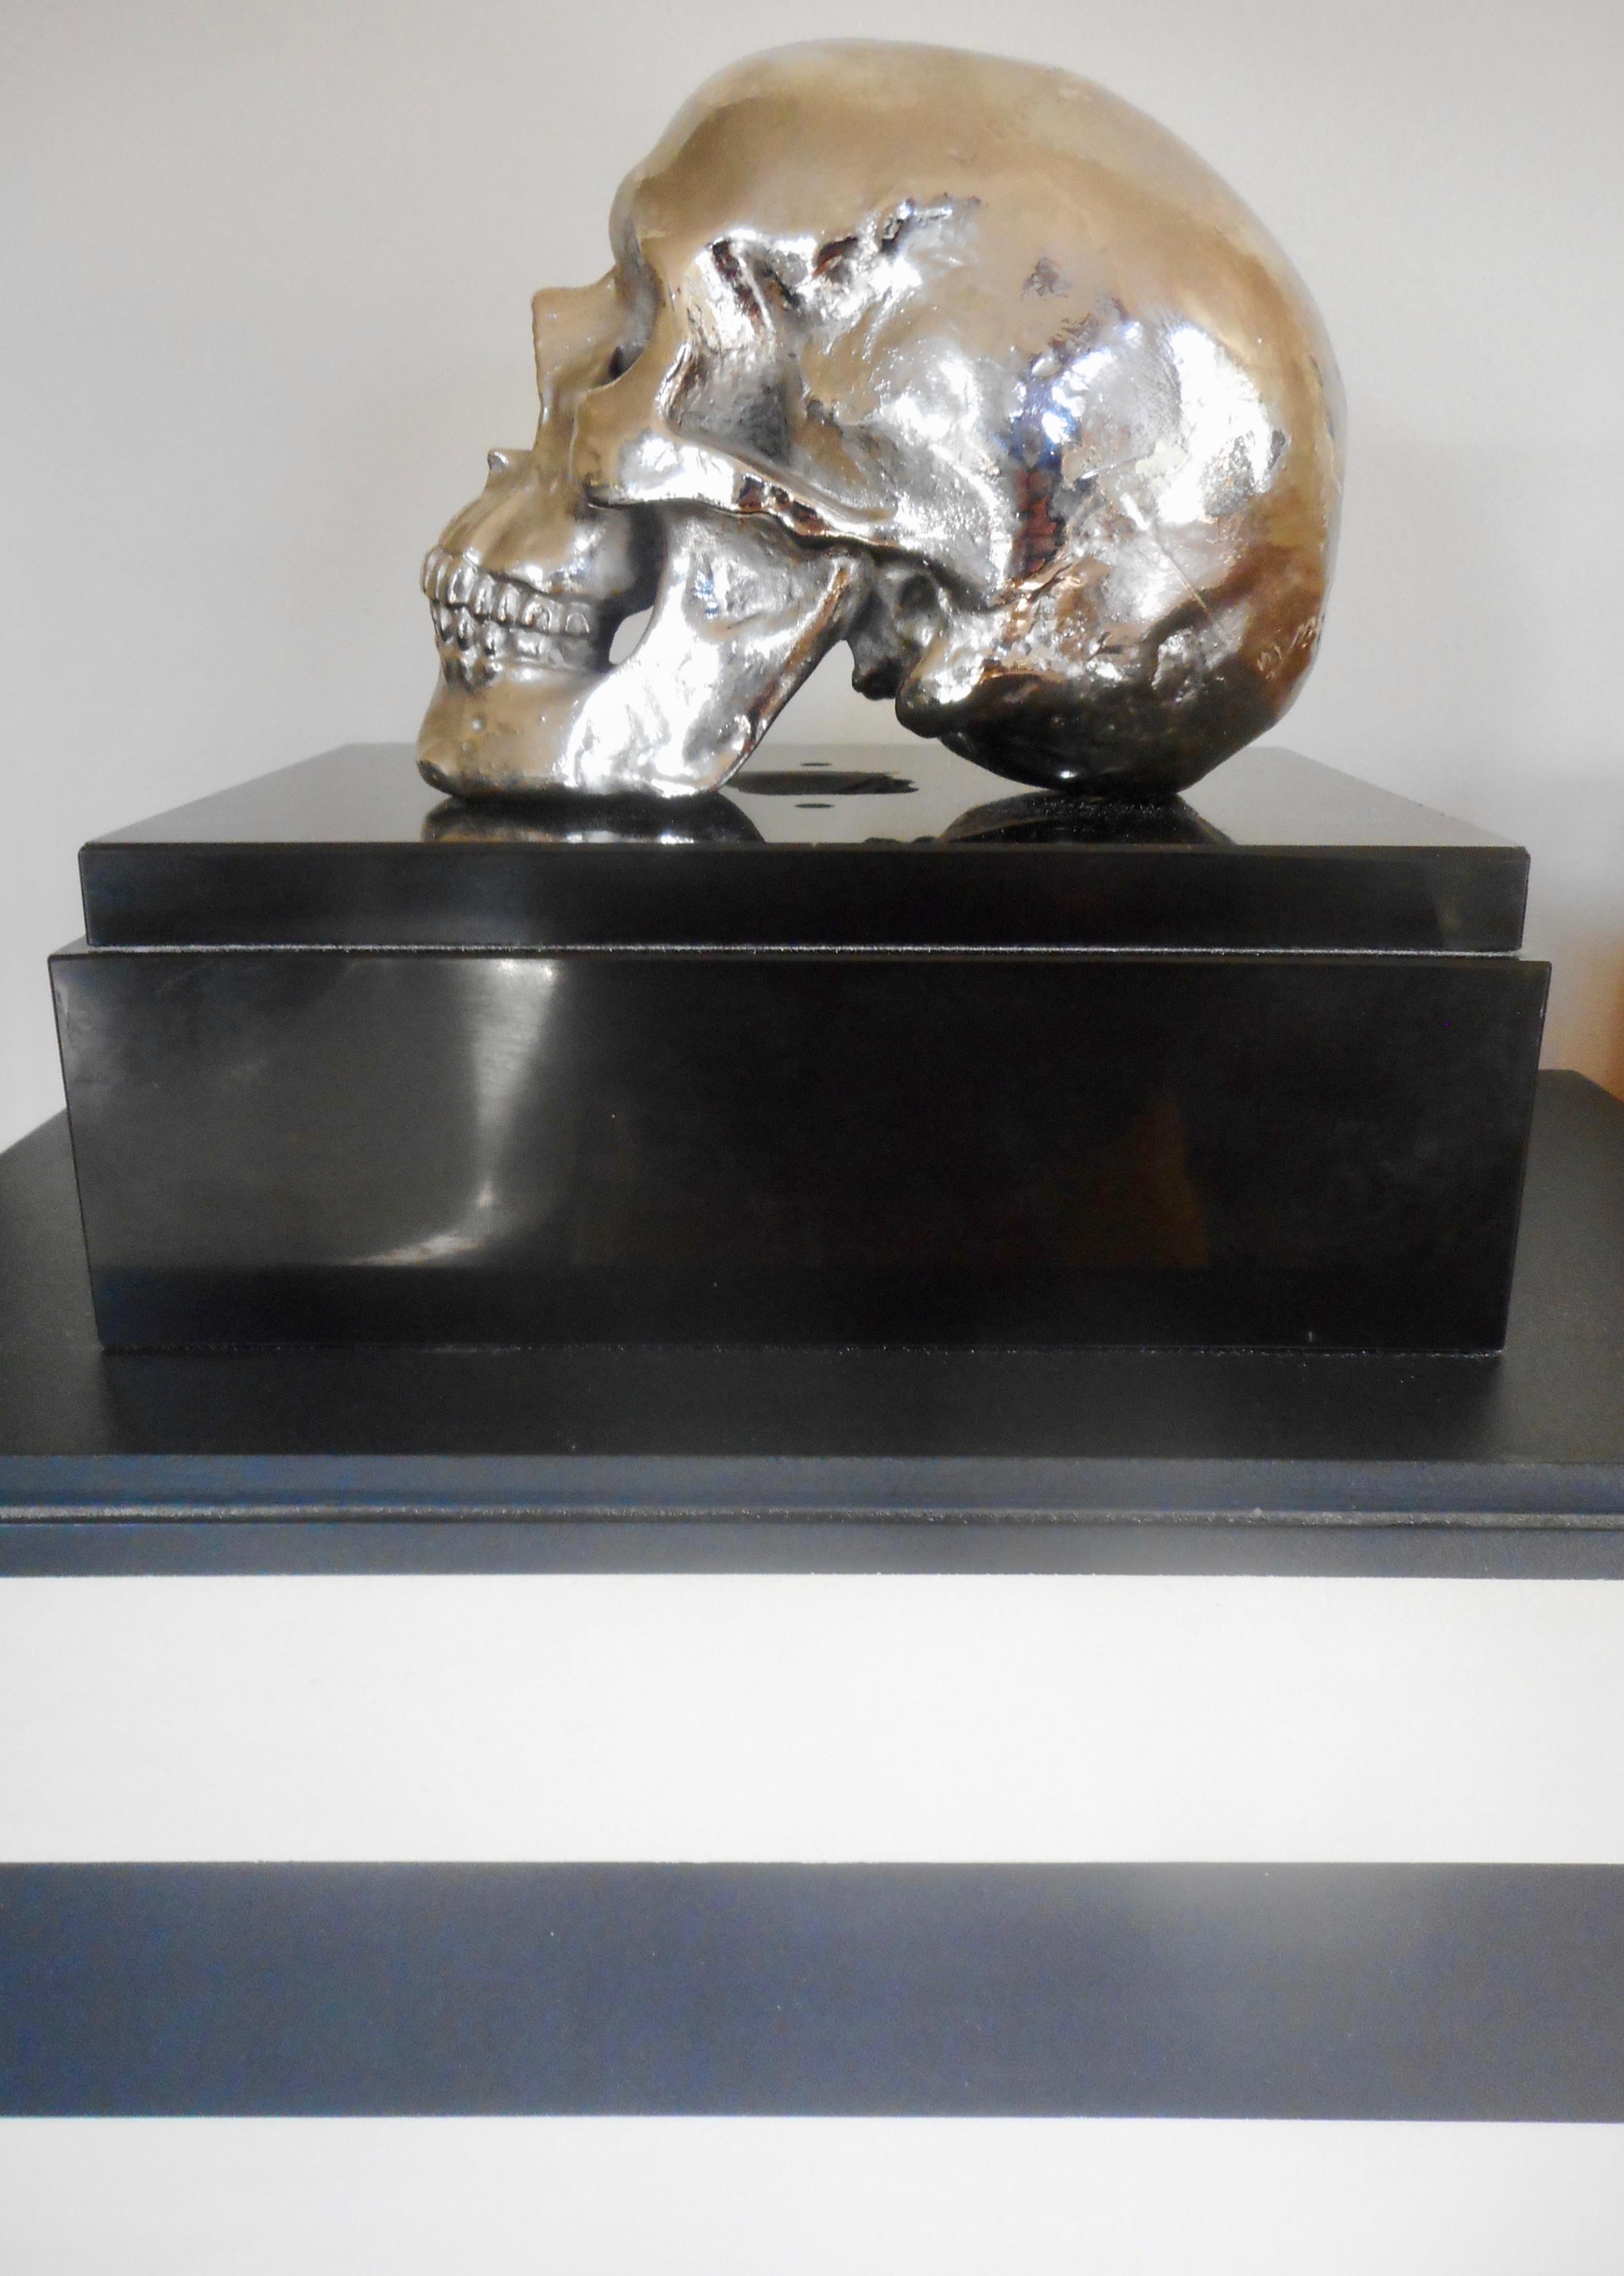 Massive Nickeled Resin Skull Signed Y.D., Belgium, 1989 For Sale 2